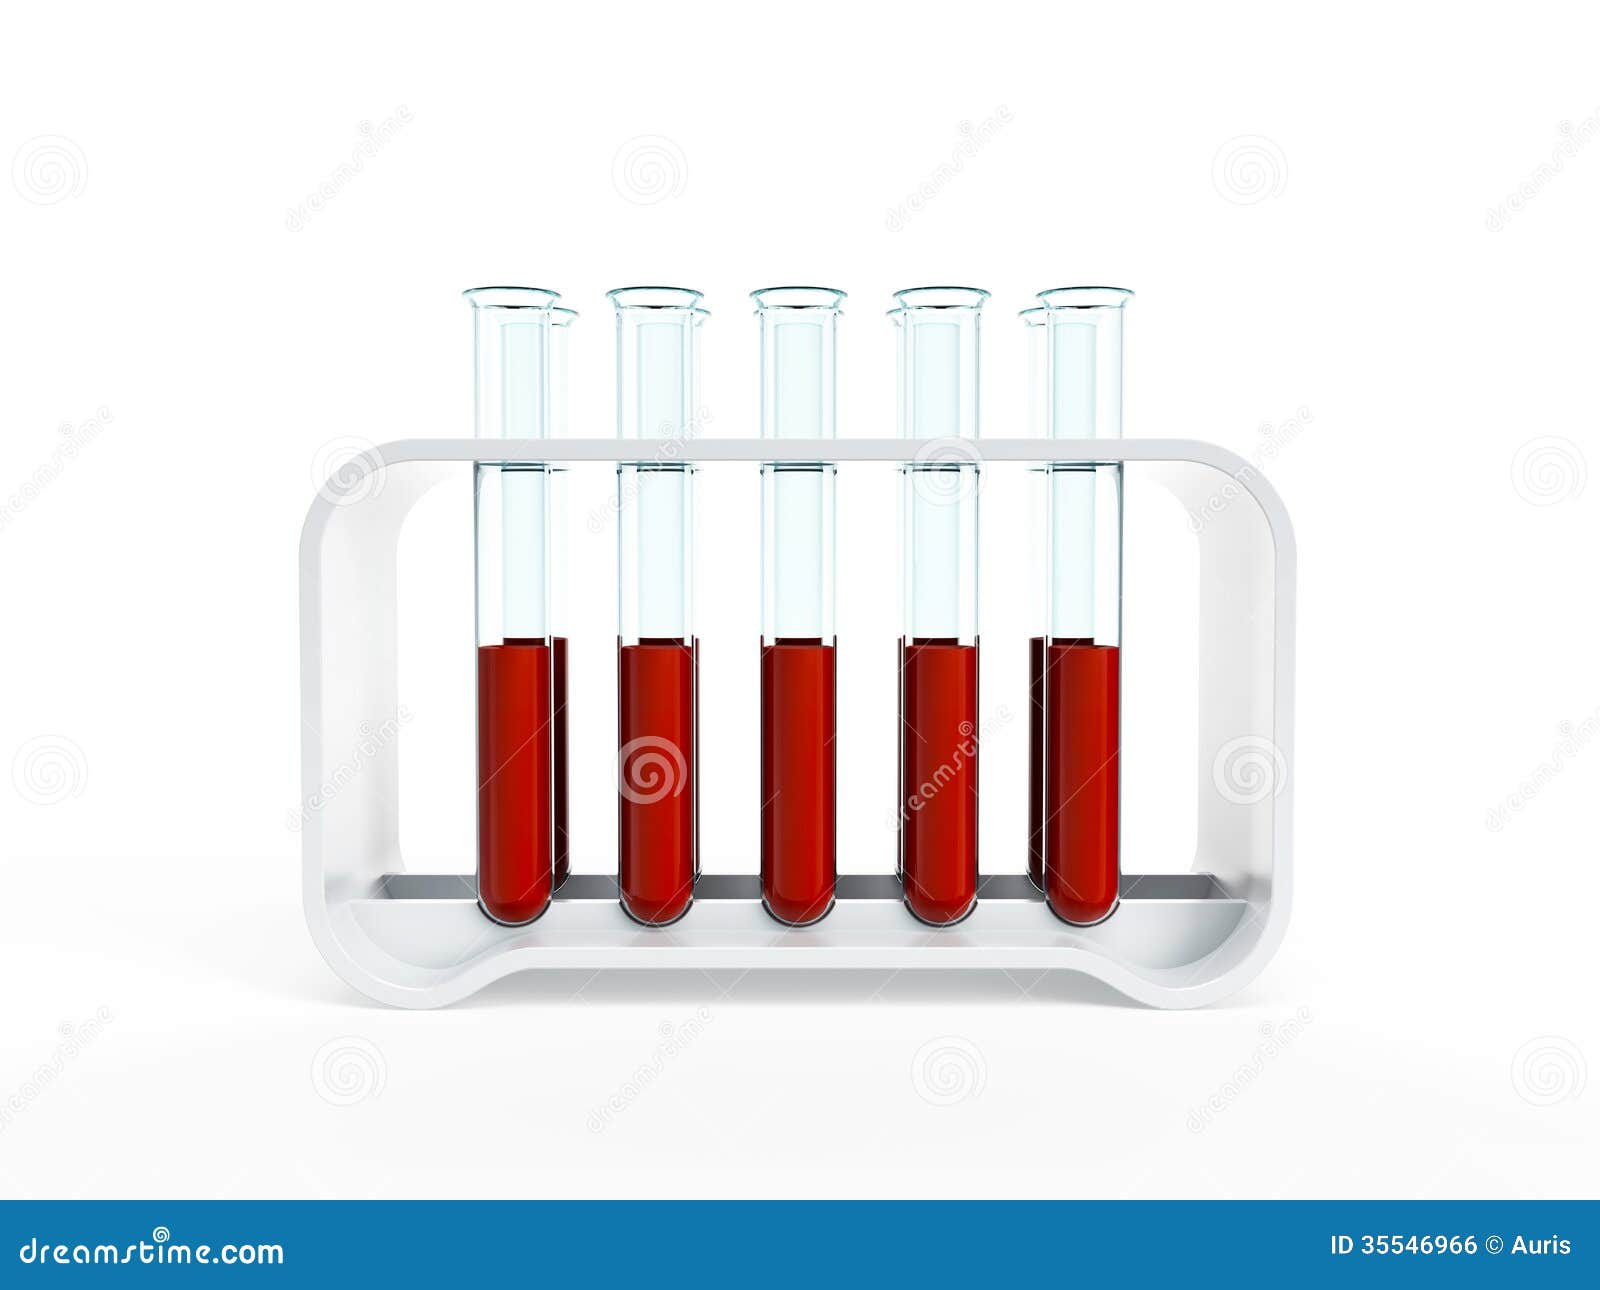 clipart blood test - photo #10